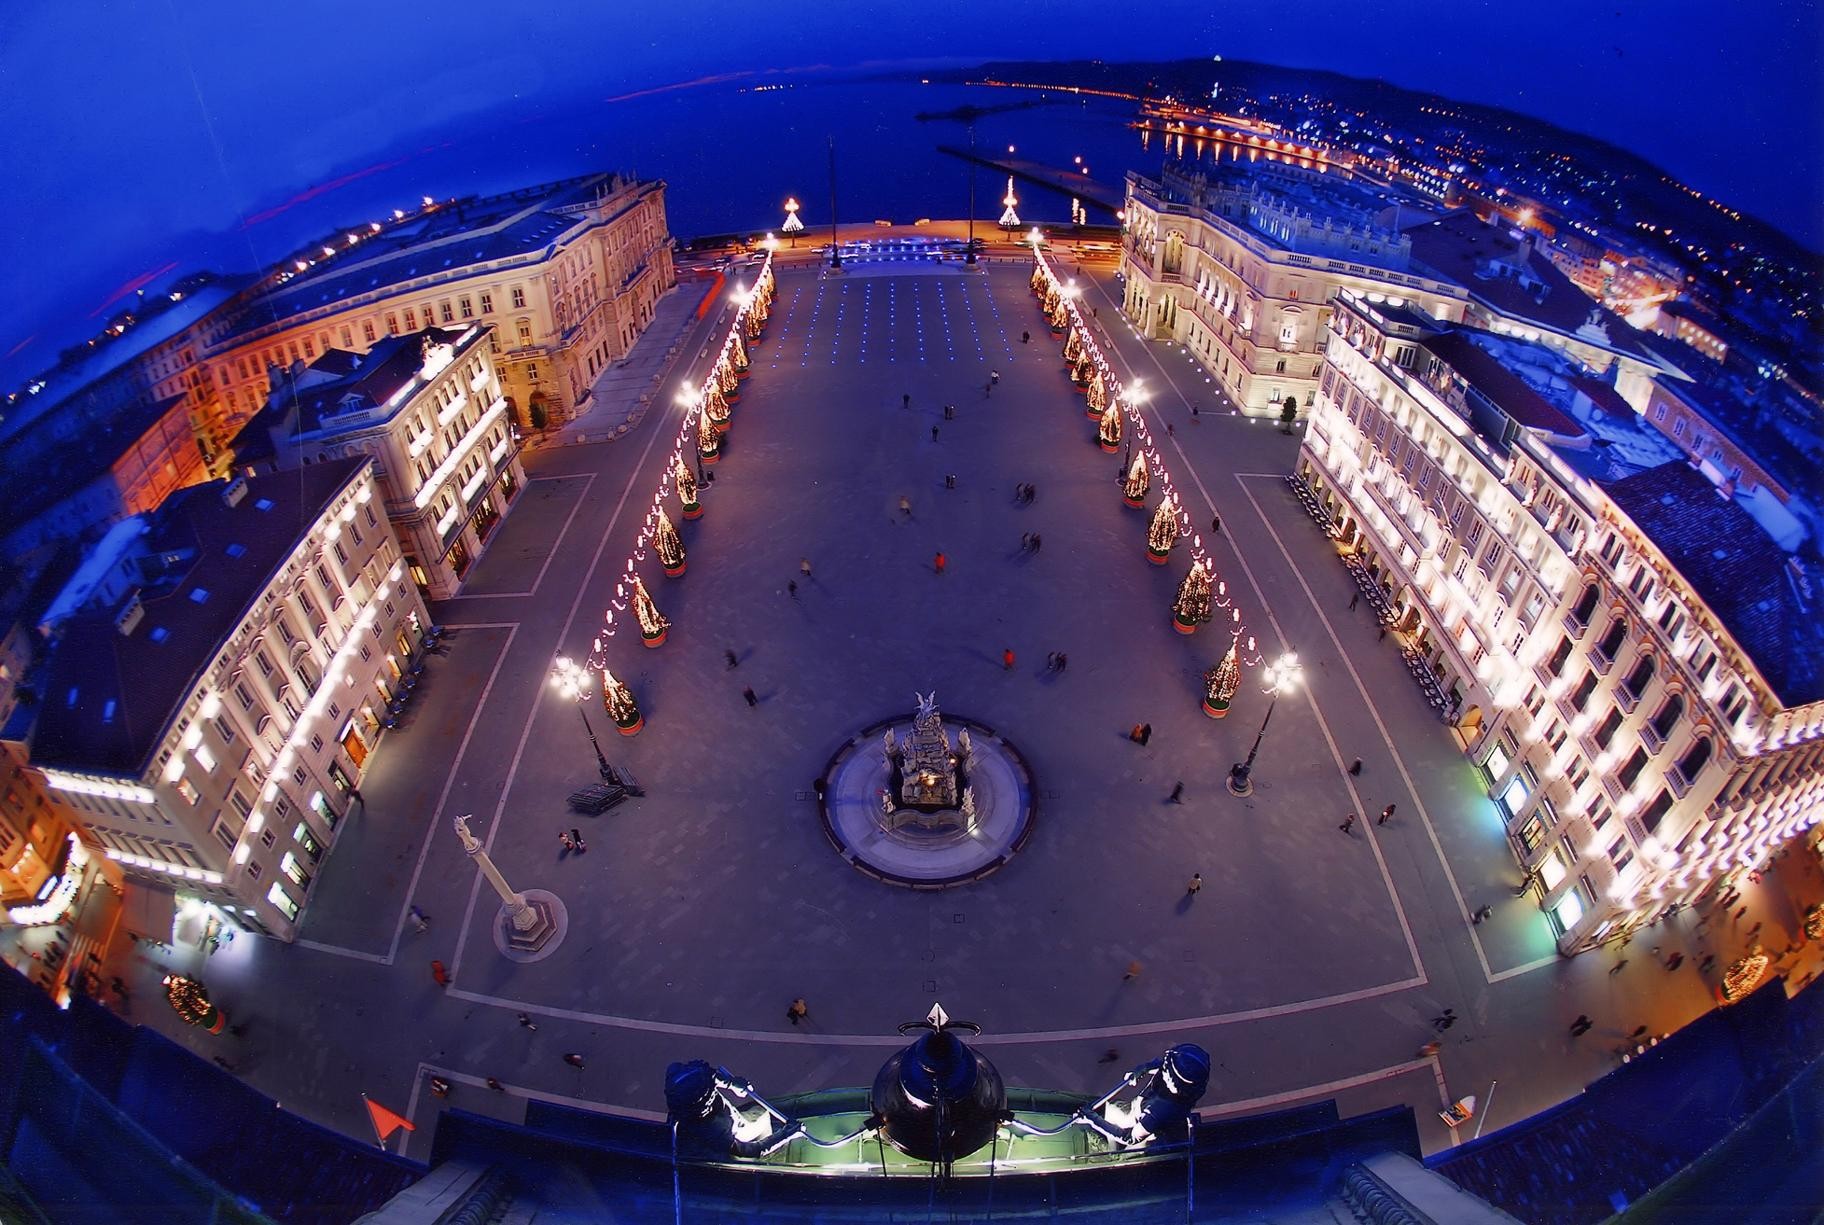 piazza_unita_aerial_view.jpg